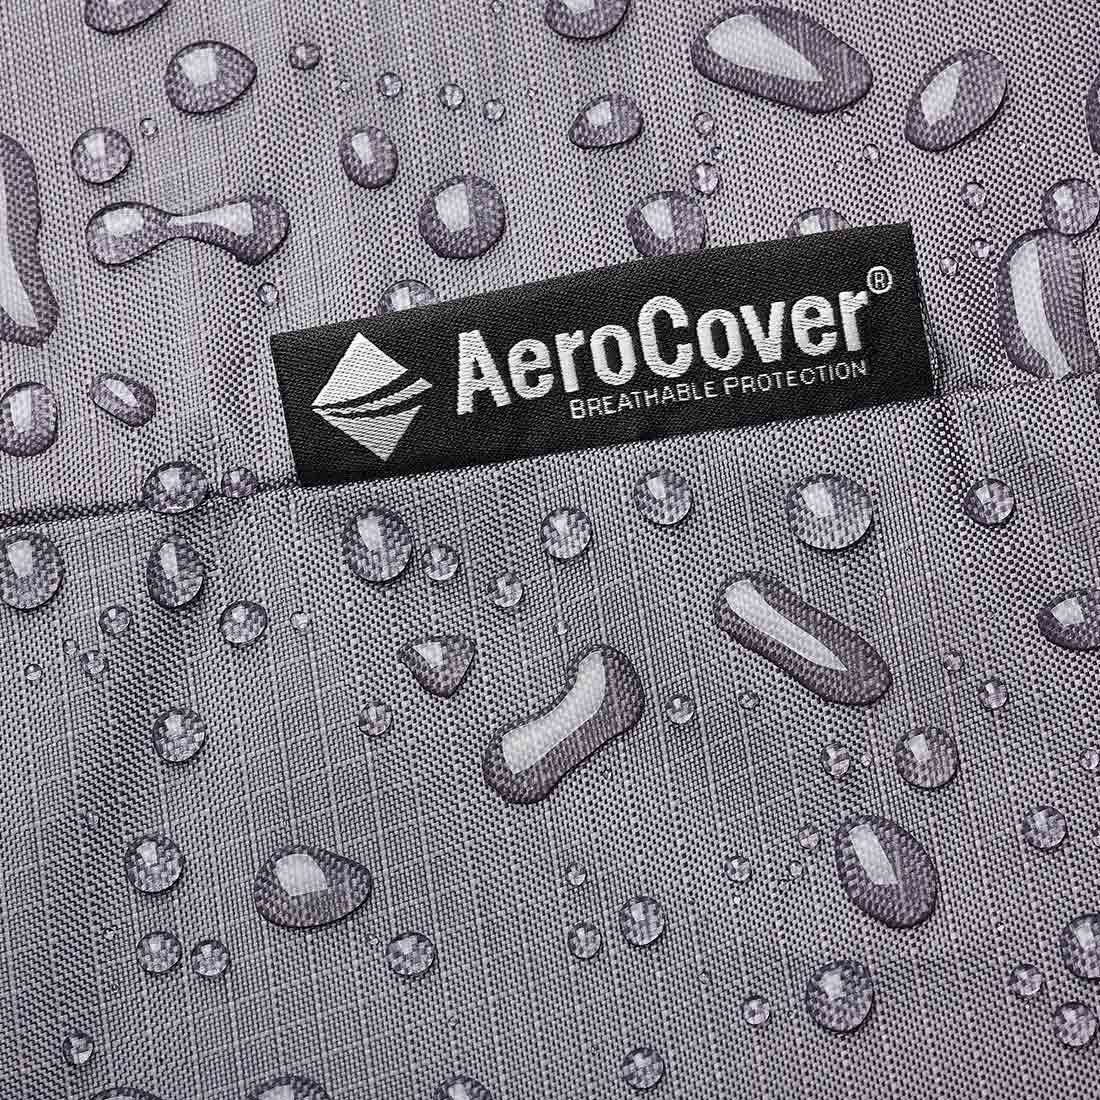 AeroCover Schutzhülle für Loungeecke 255x255x100x70cm Polyester